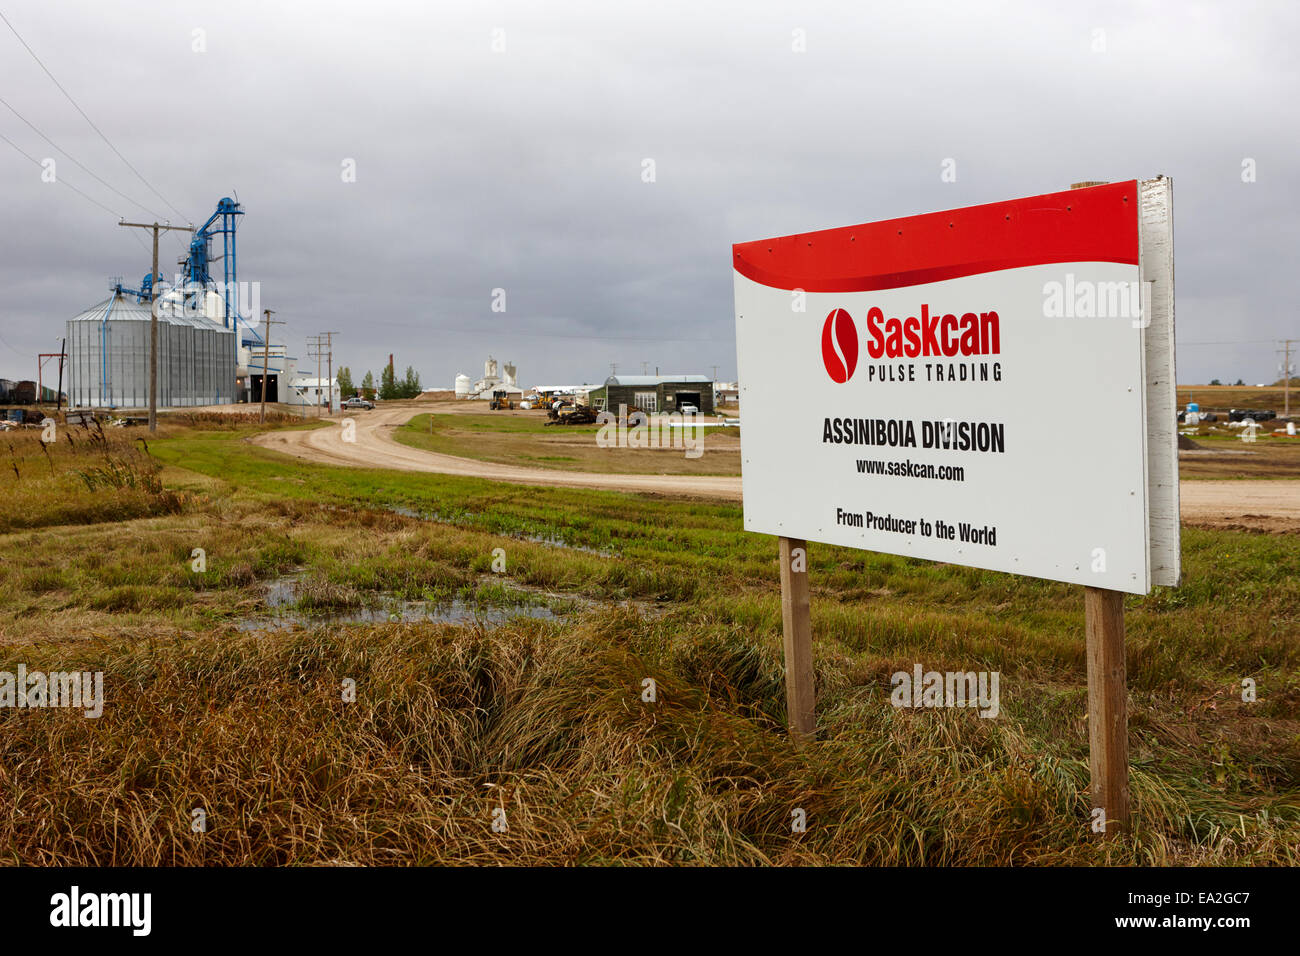 saskcan pulse trading assiniboia division Saskatchewan Canada Stock Photo